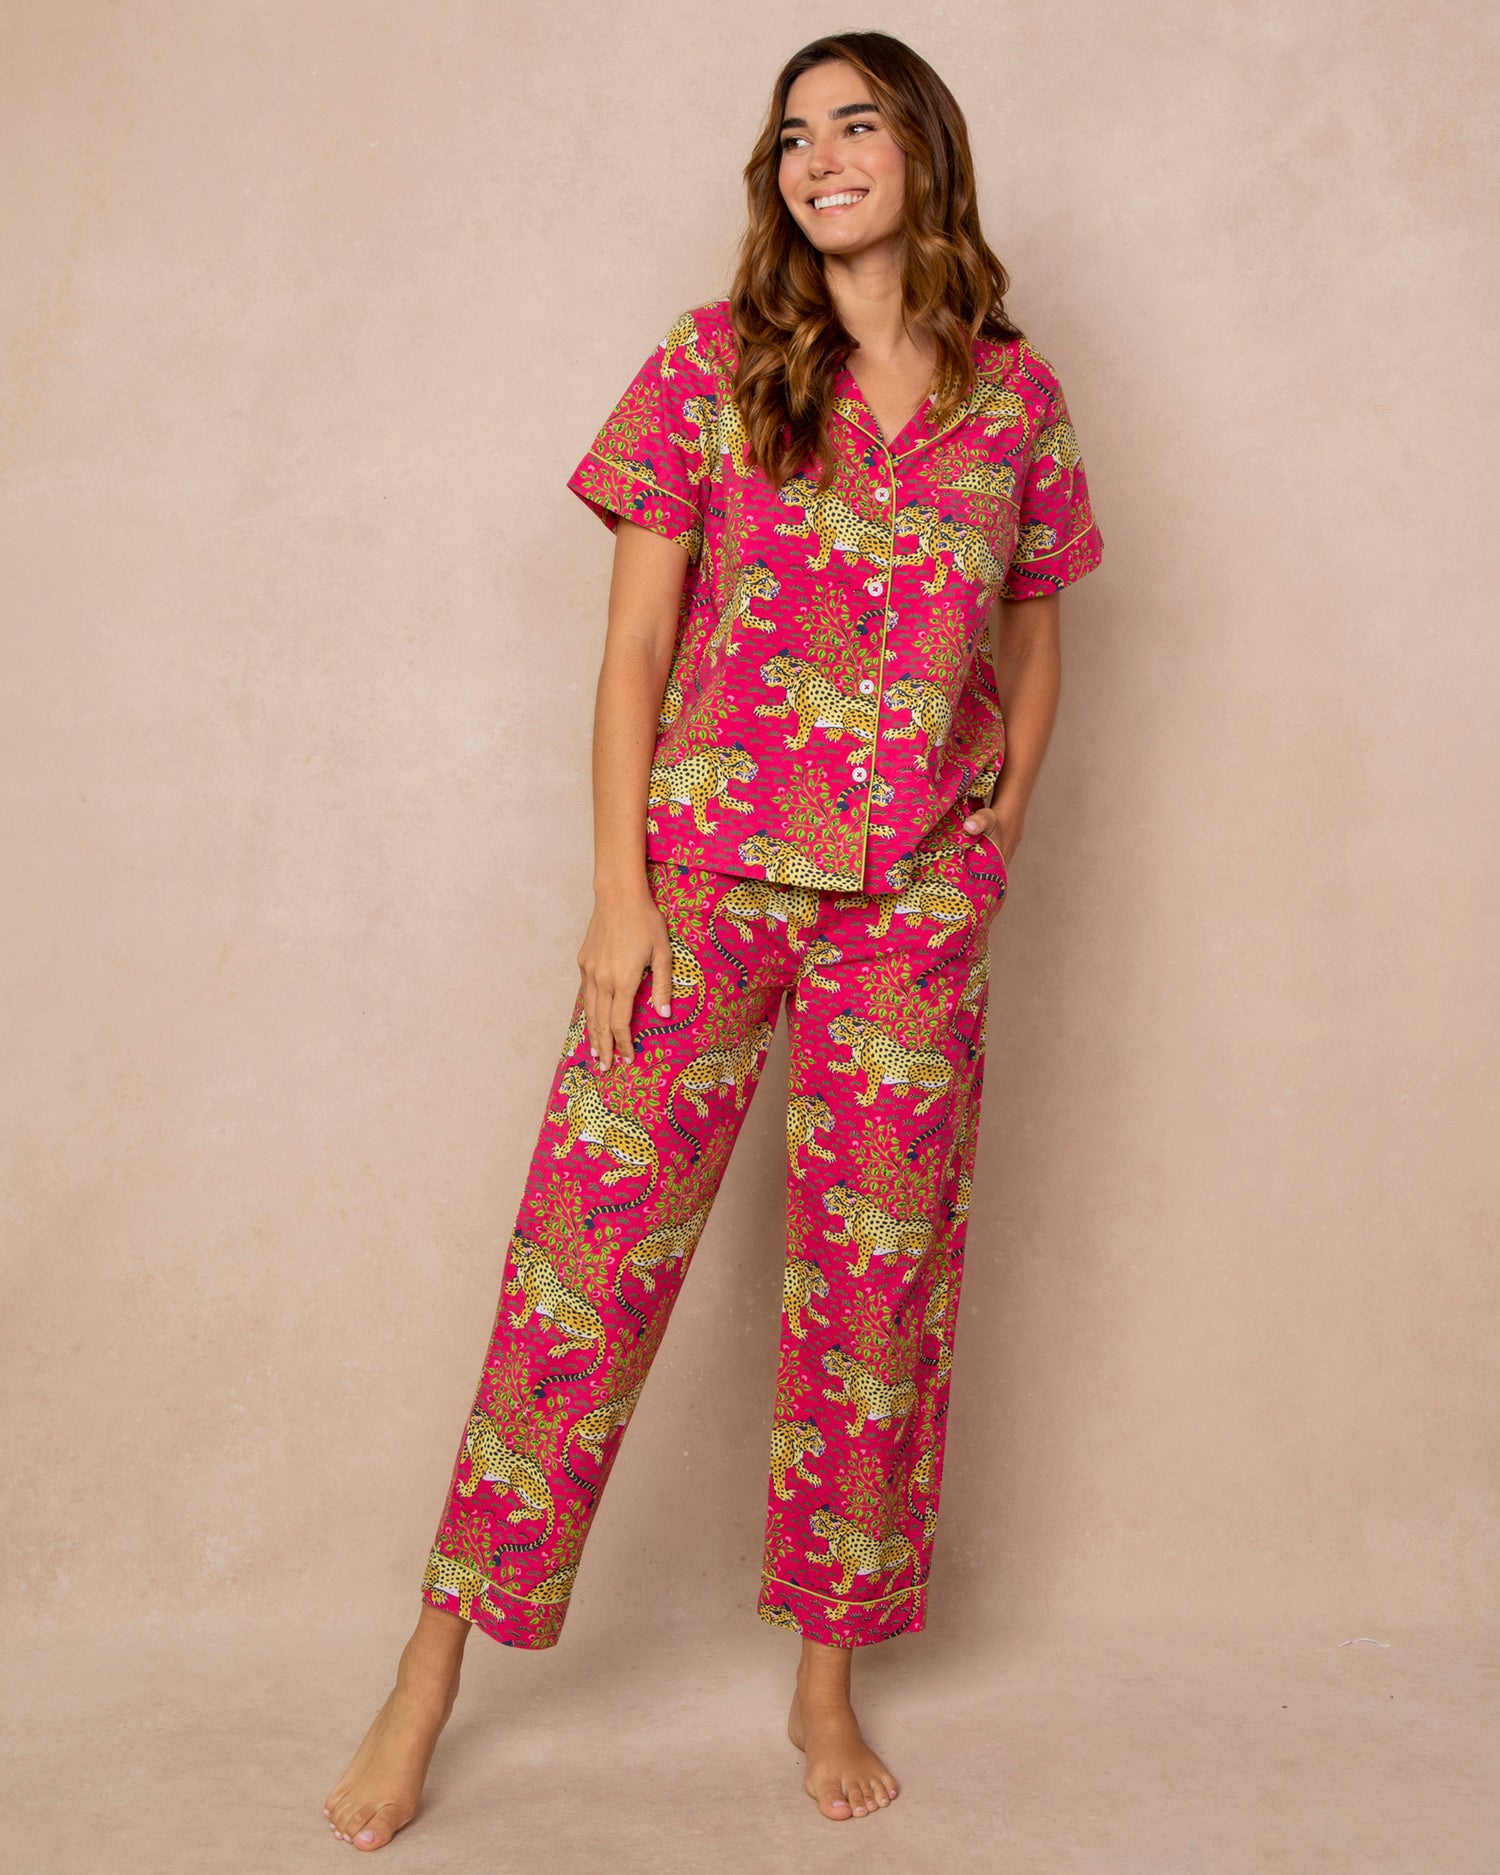 Bagheera - Short Sleeve Top & Long Pants Set - Hot Pink - Printfresh